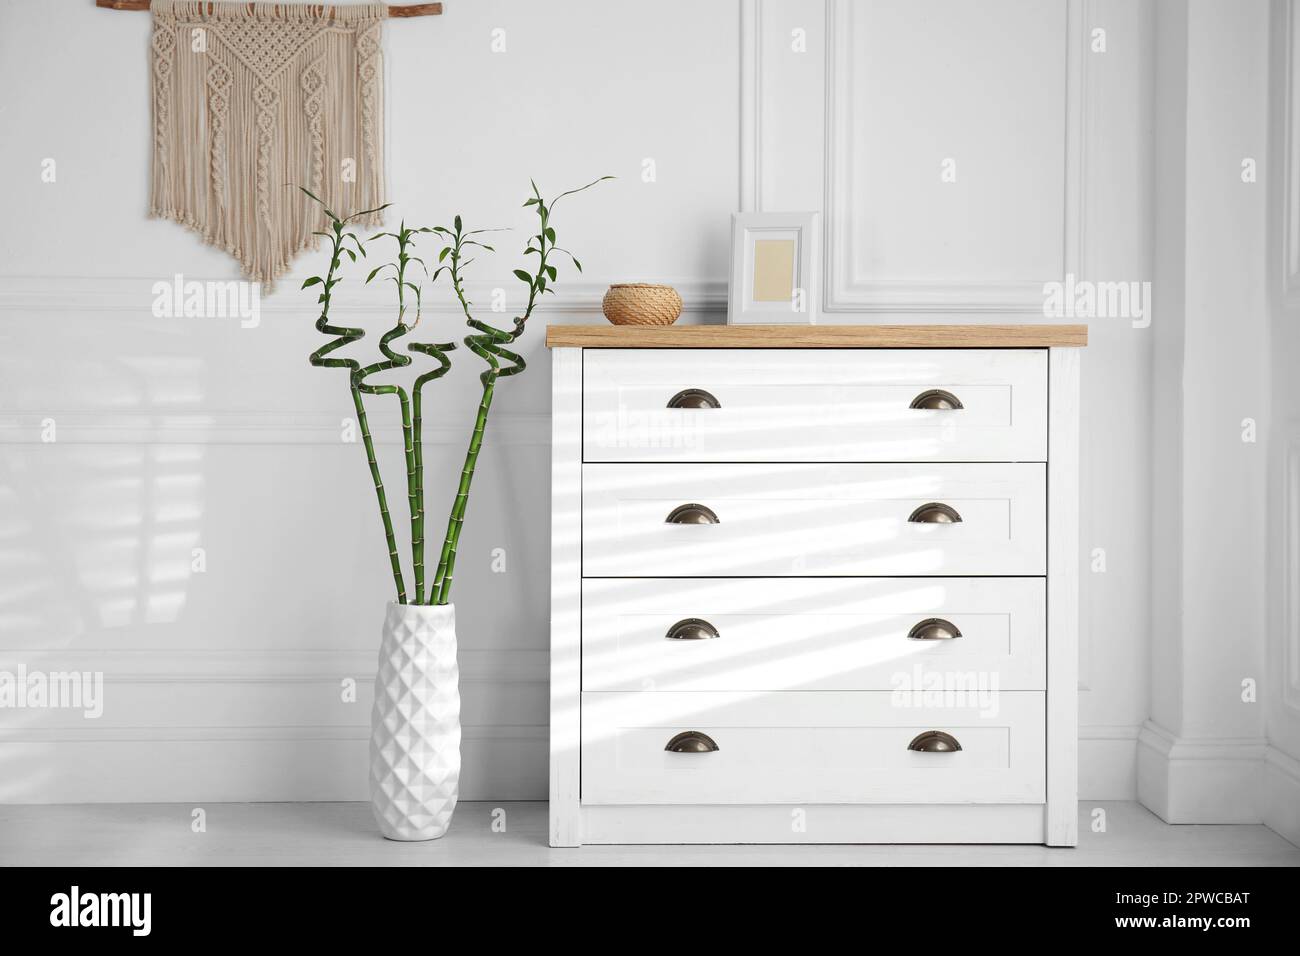 https://c8.alamy.com/comp/2PWCBAT/vase-with-green-bamboo-stems-near-chest-of-drawers-in-room-interior-design-2PWCBAT.jpg